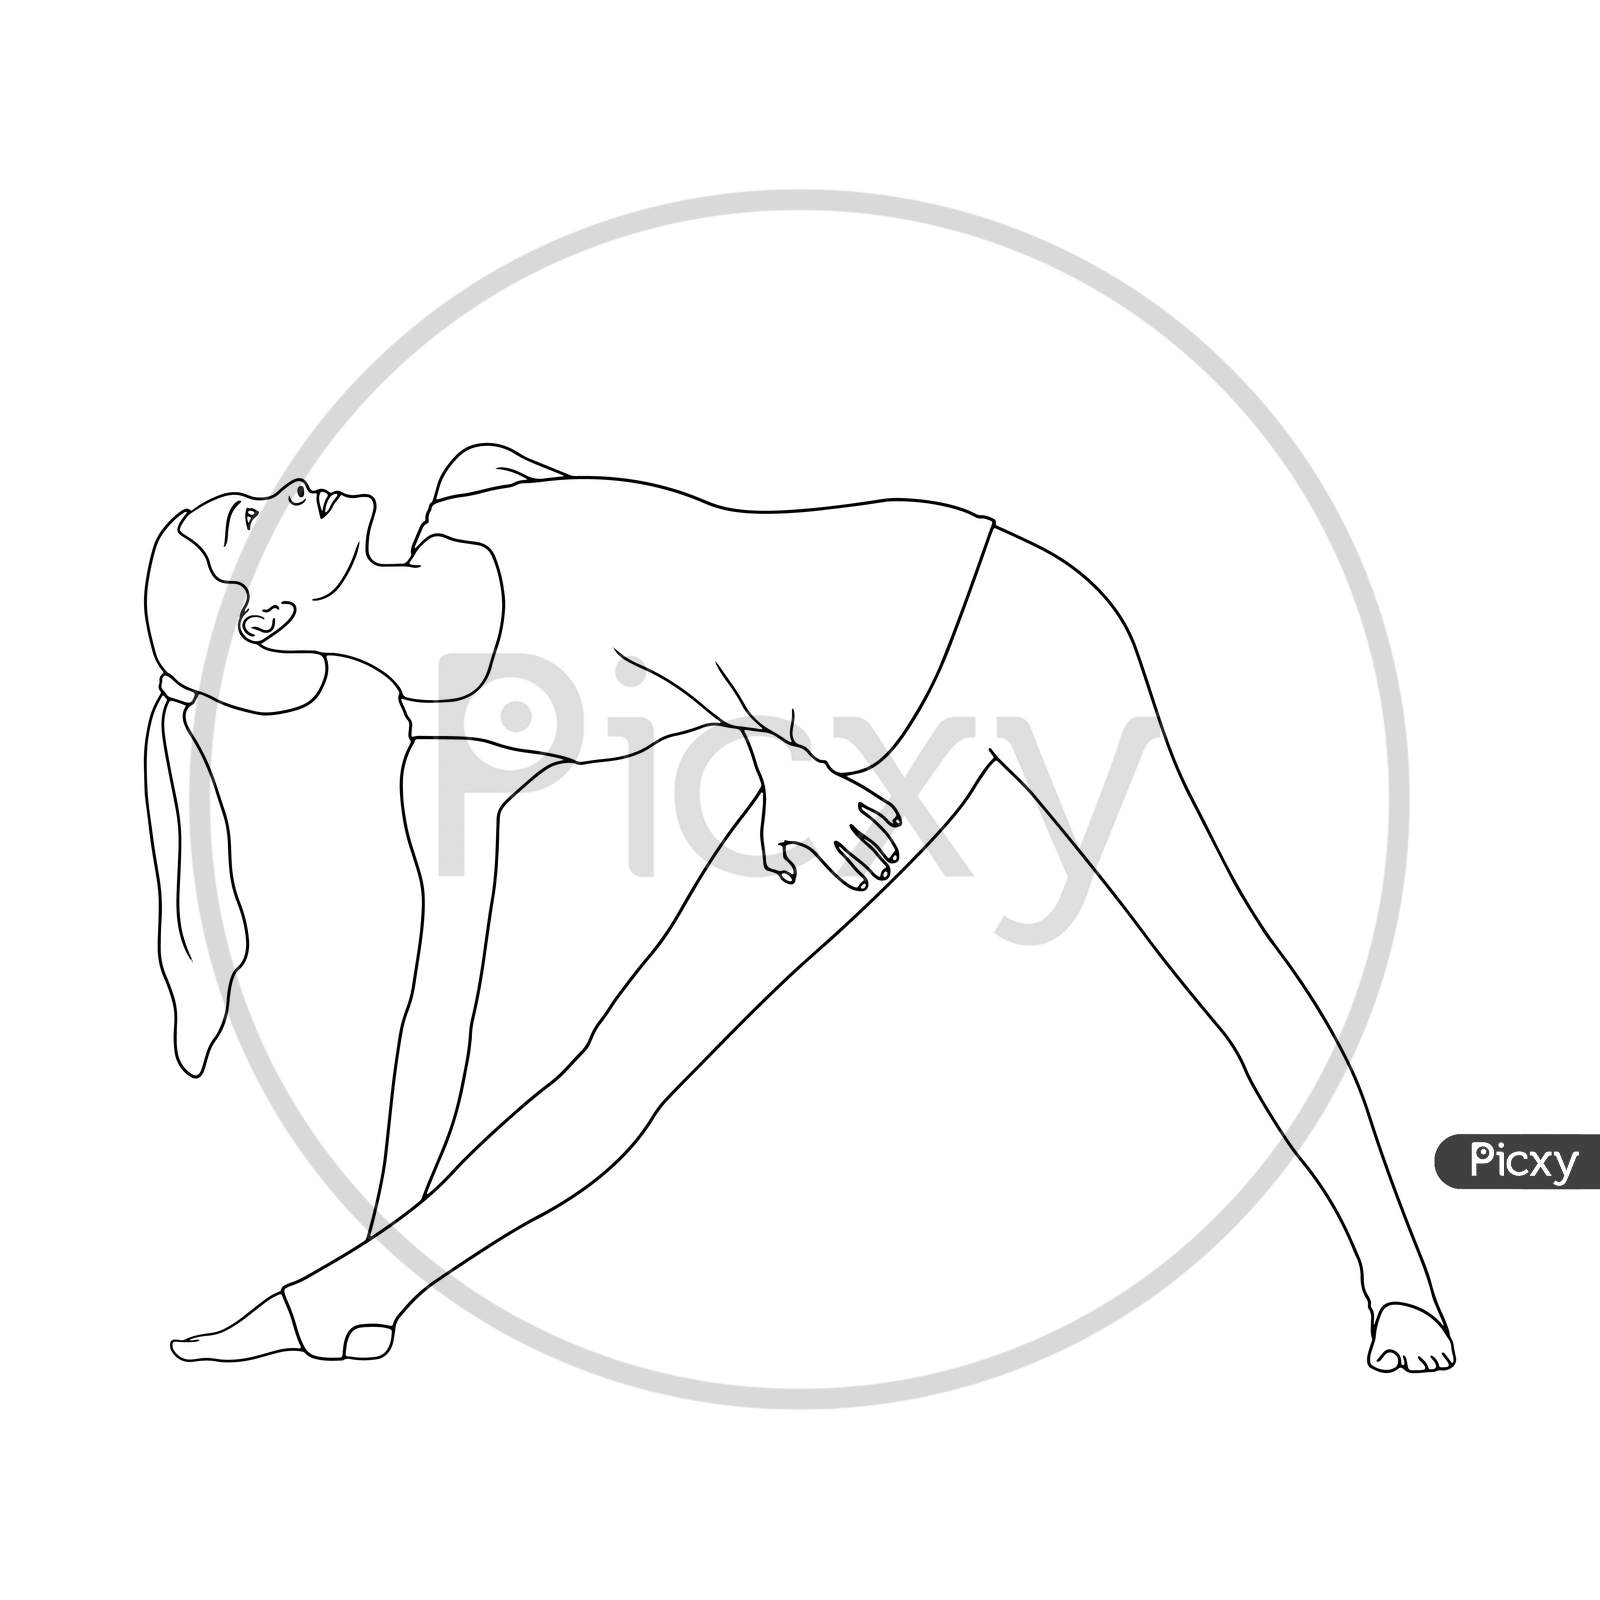 Yoga Poses Images - Free Download on Freepik